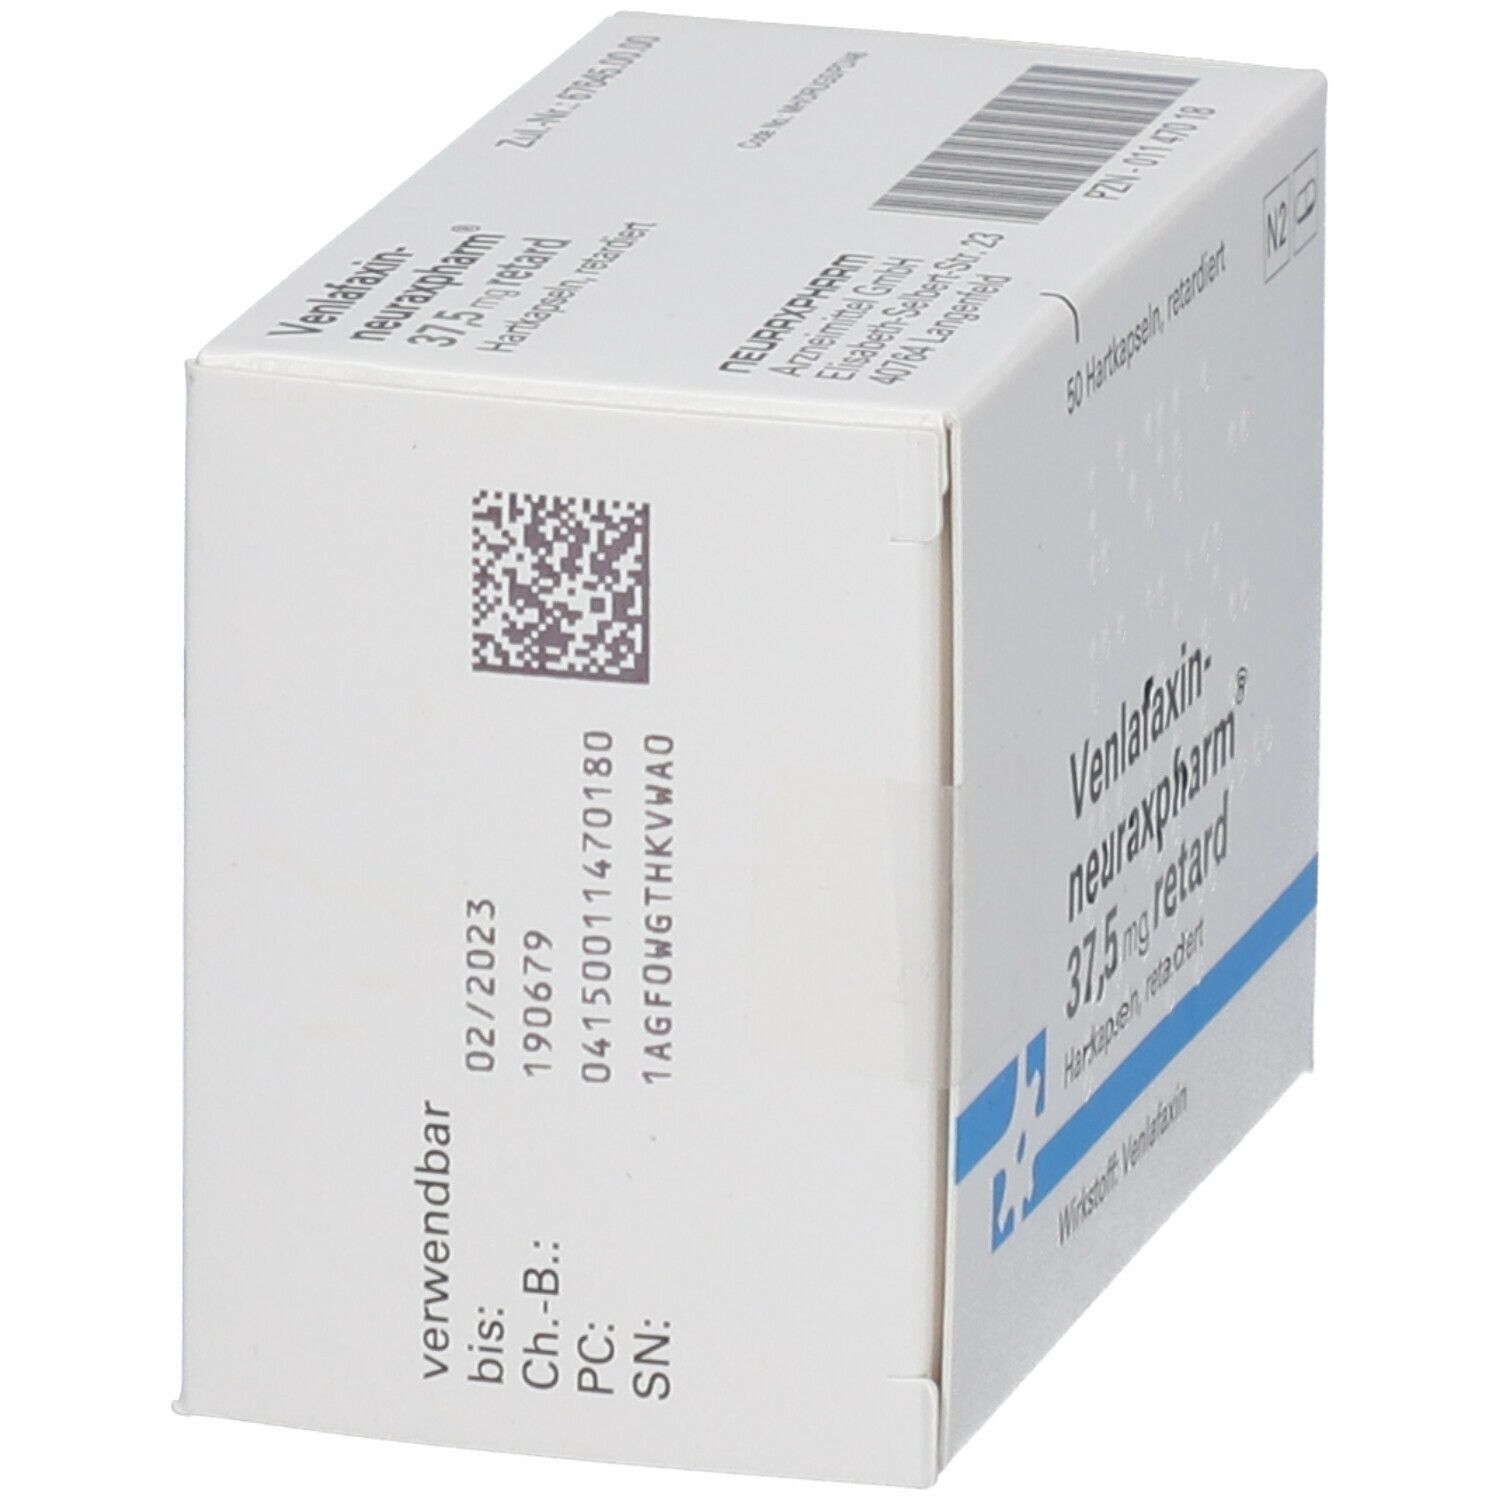 Venlafaxin-neuraxpharm® 37,5 mg retard